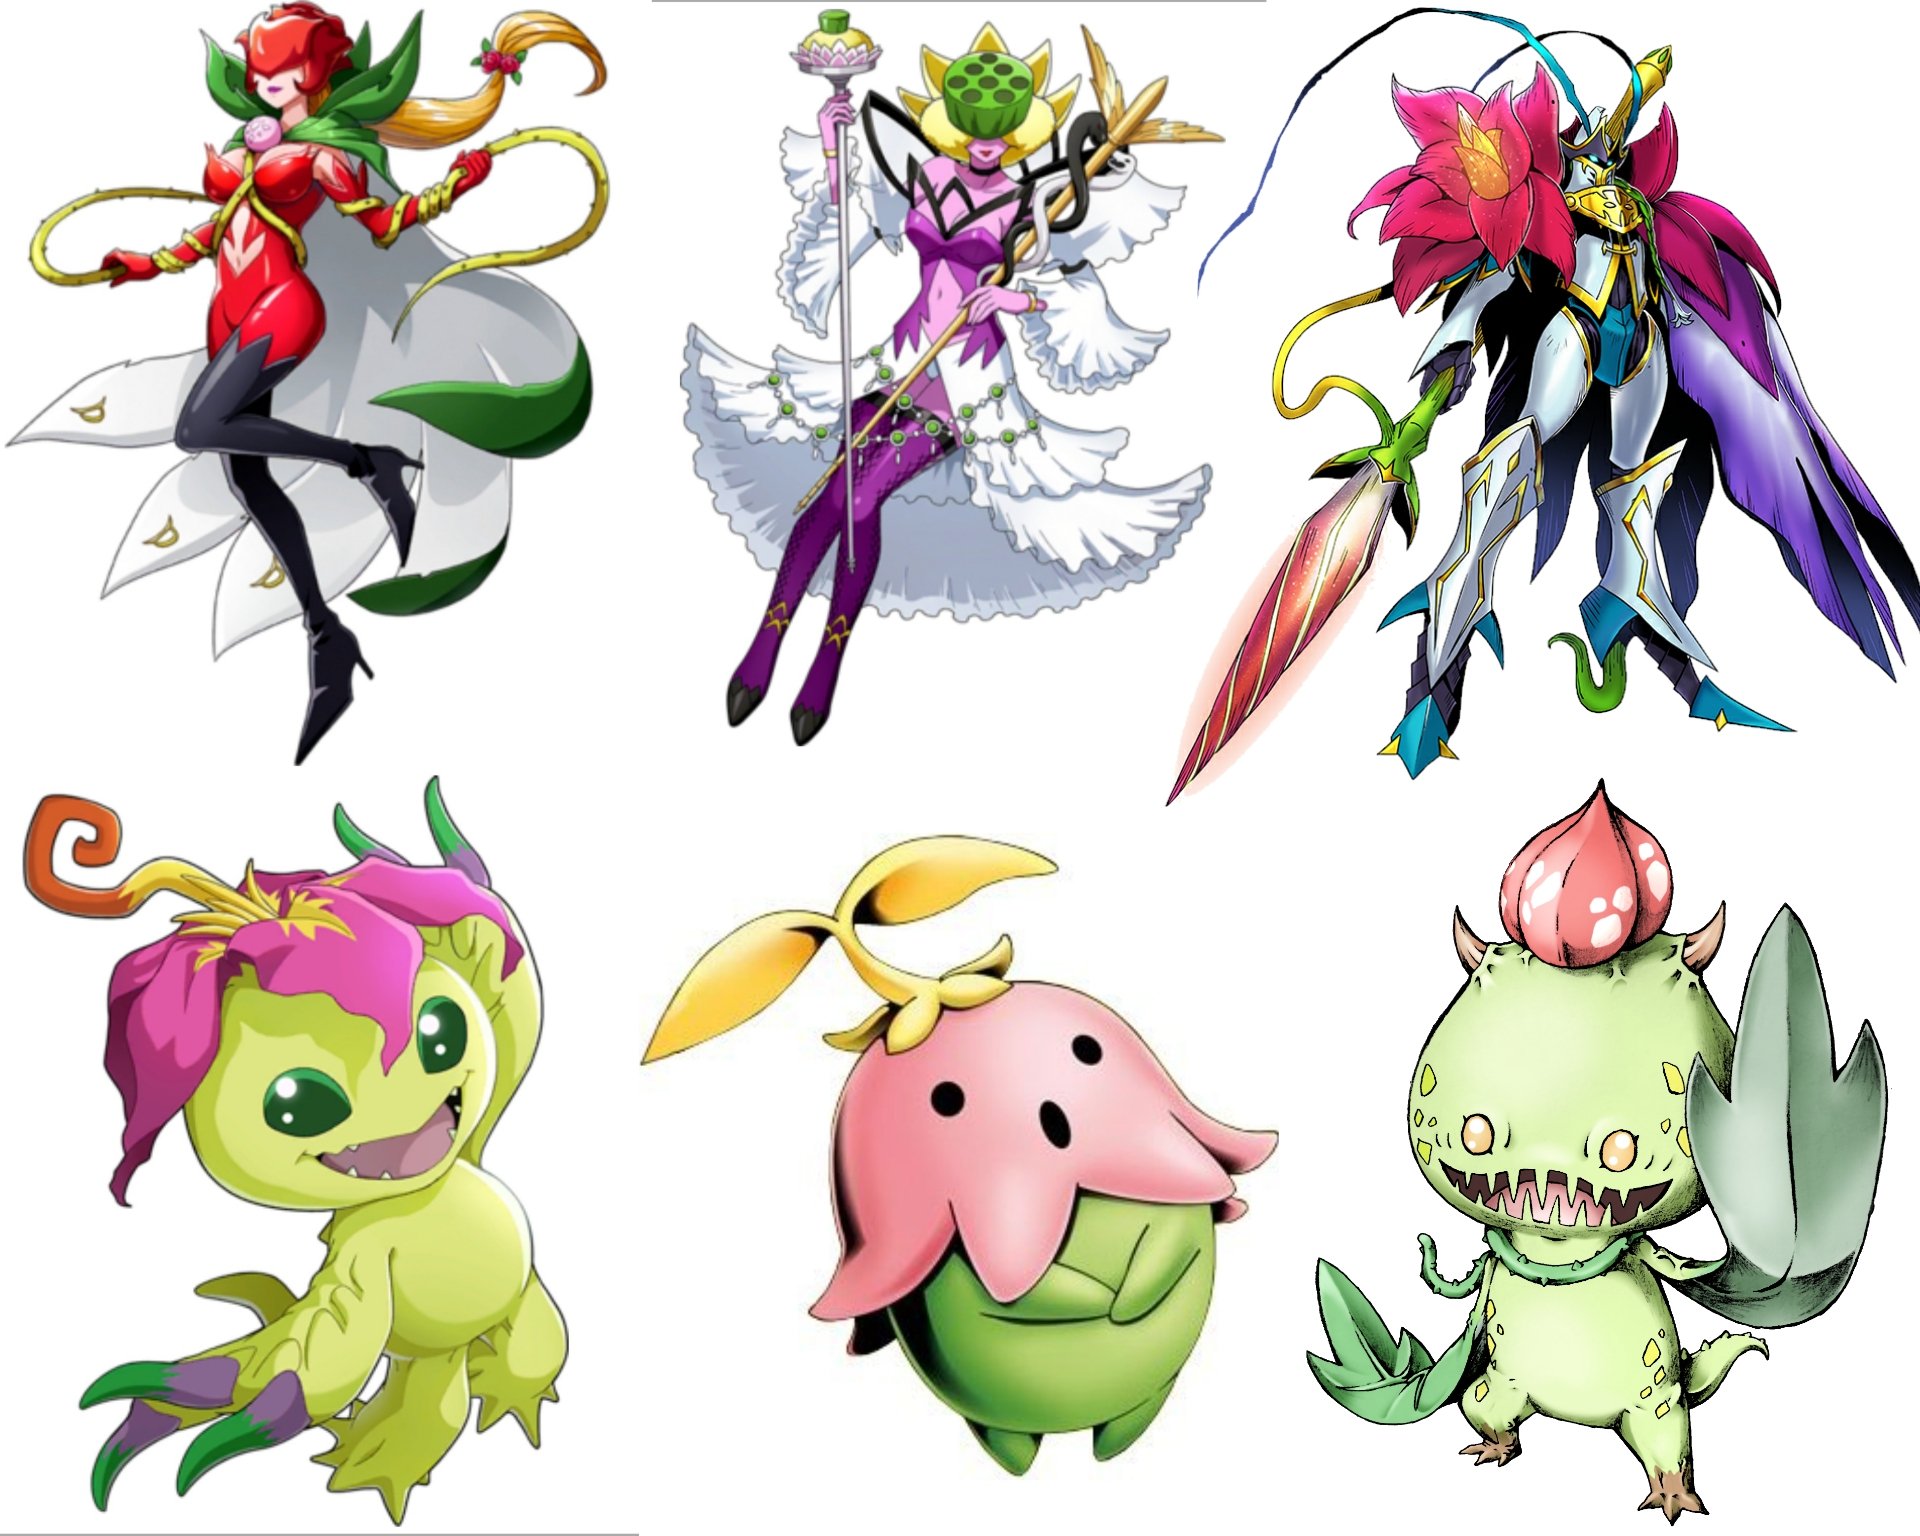 Gev'S på Twitter: "Plantas fadas/Plants and fairys. #Digimon #DigimonGhostGame #DigimonFanmode #DigimonOC #DigimonCardGame https://t.co/EF5P8Bcni1" / Twitter